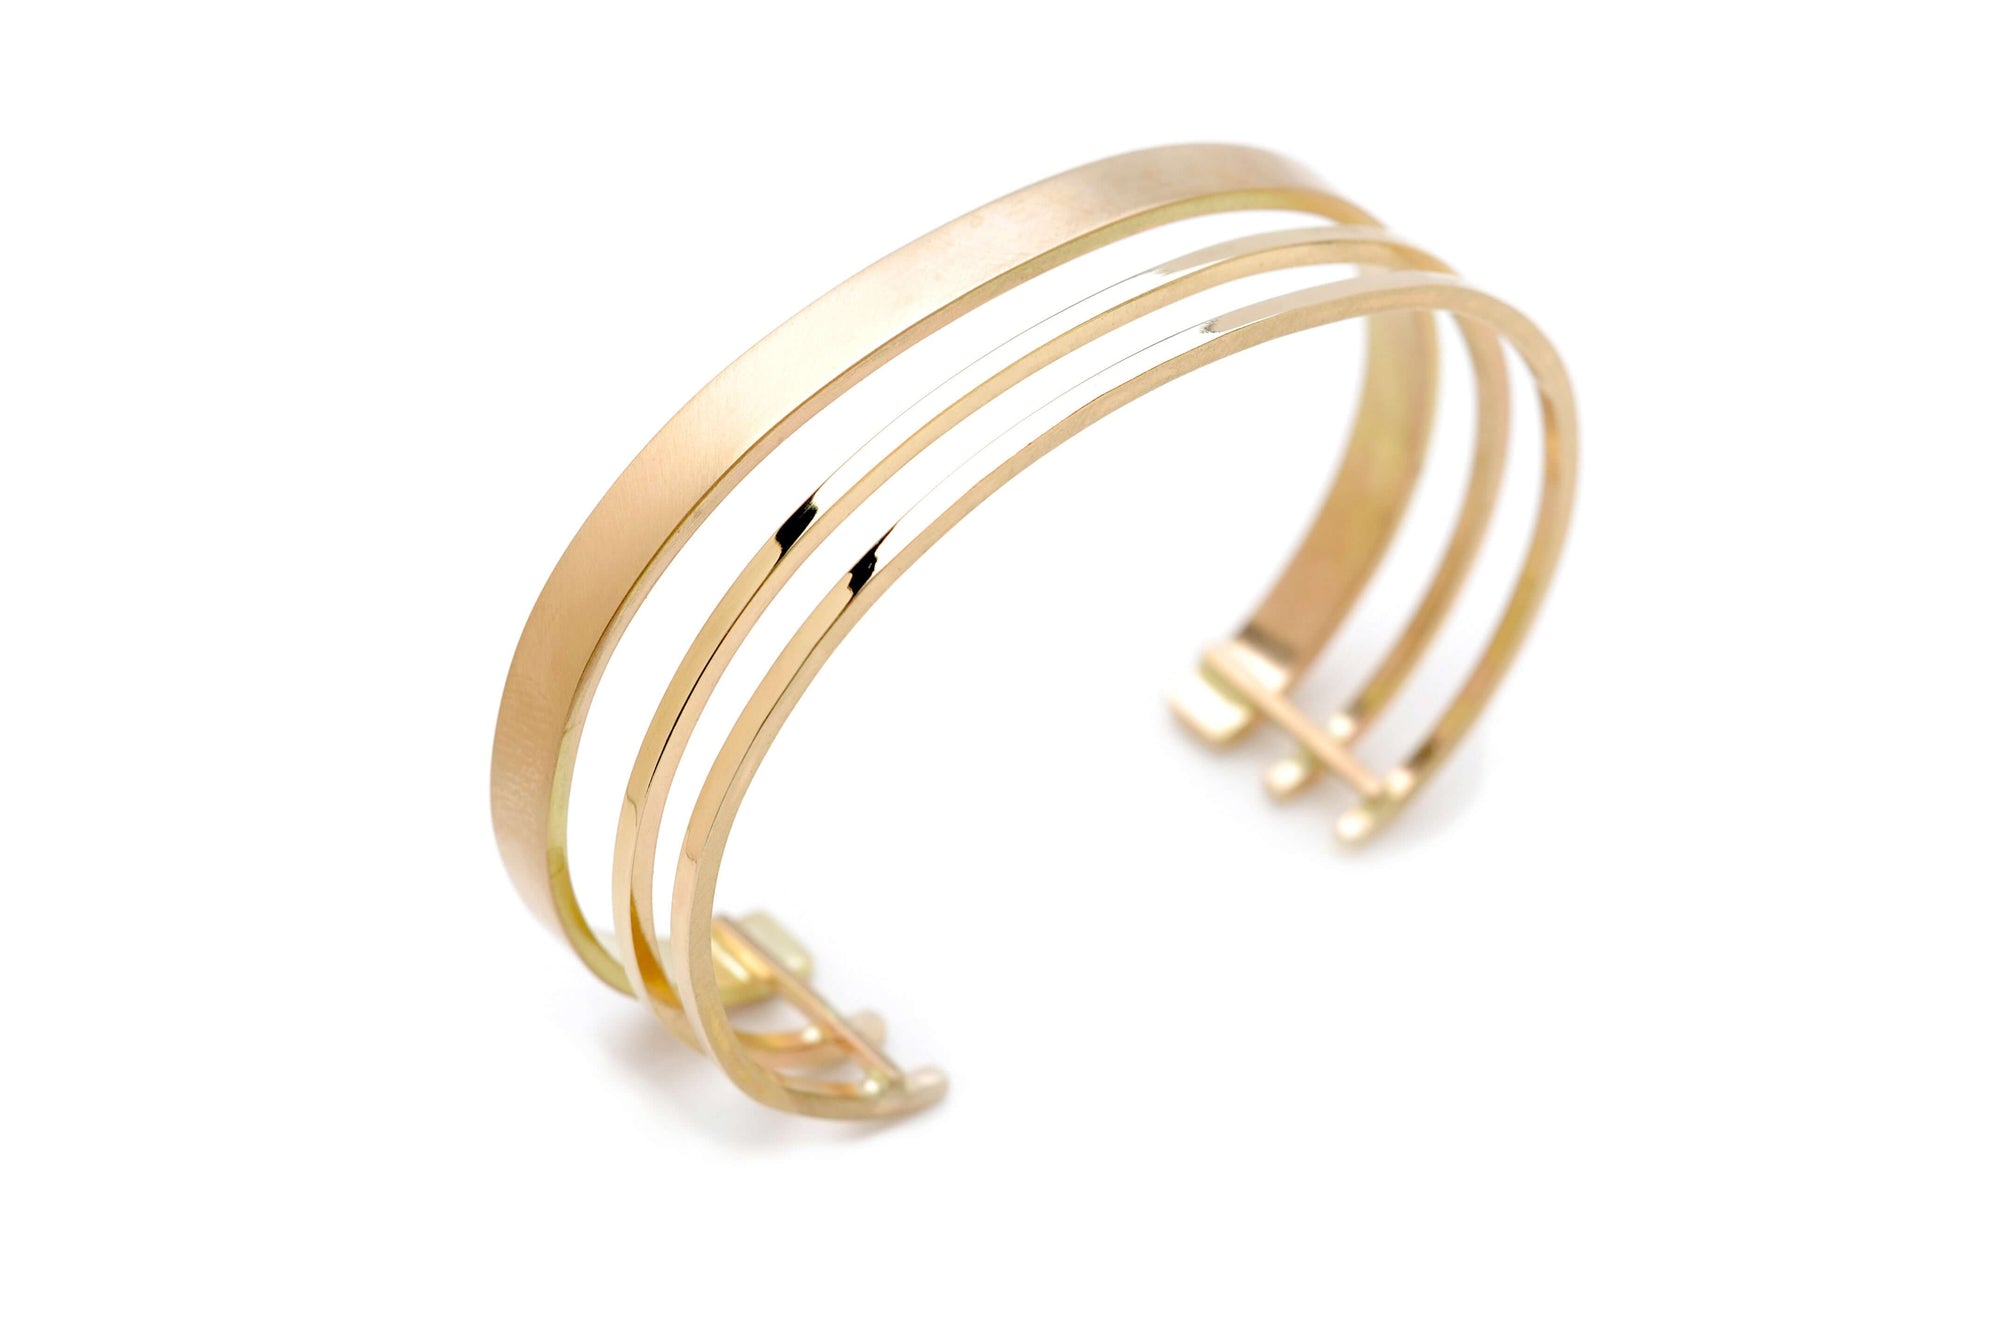 A triple band 14k gold cuff bracelet